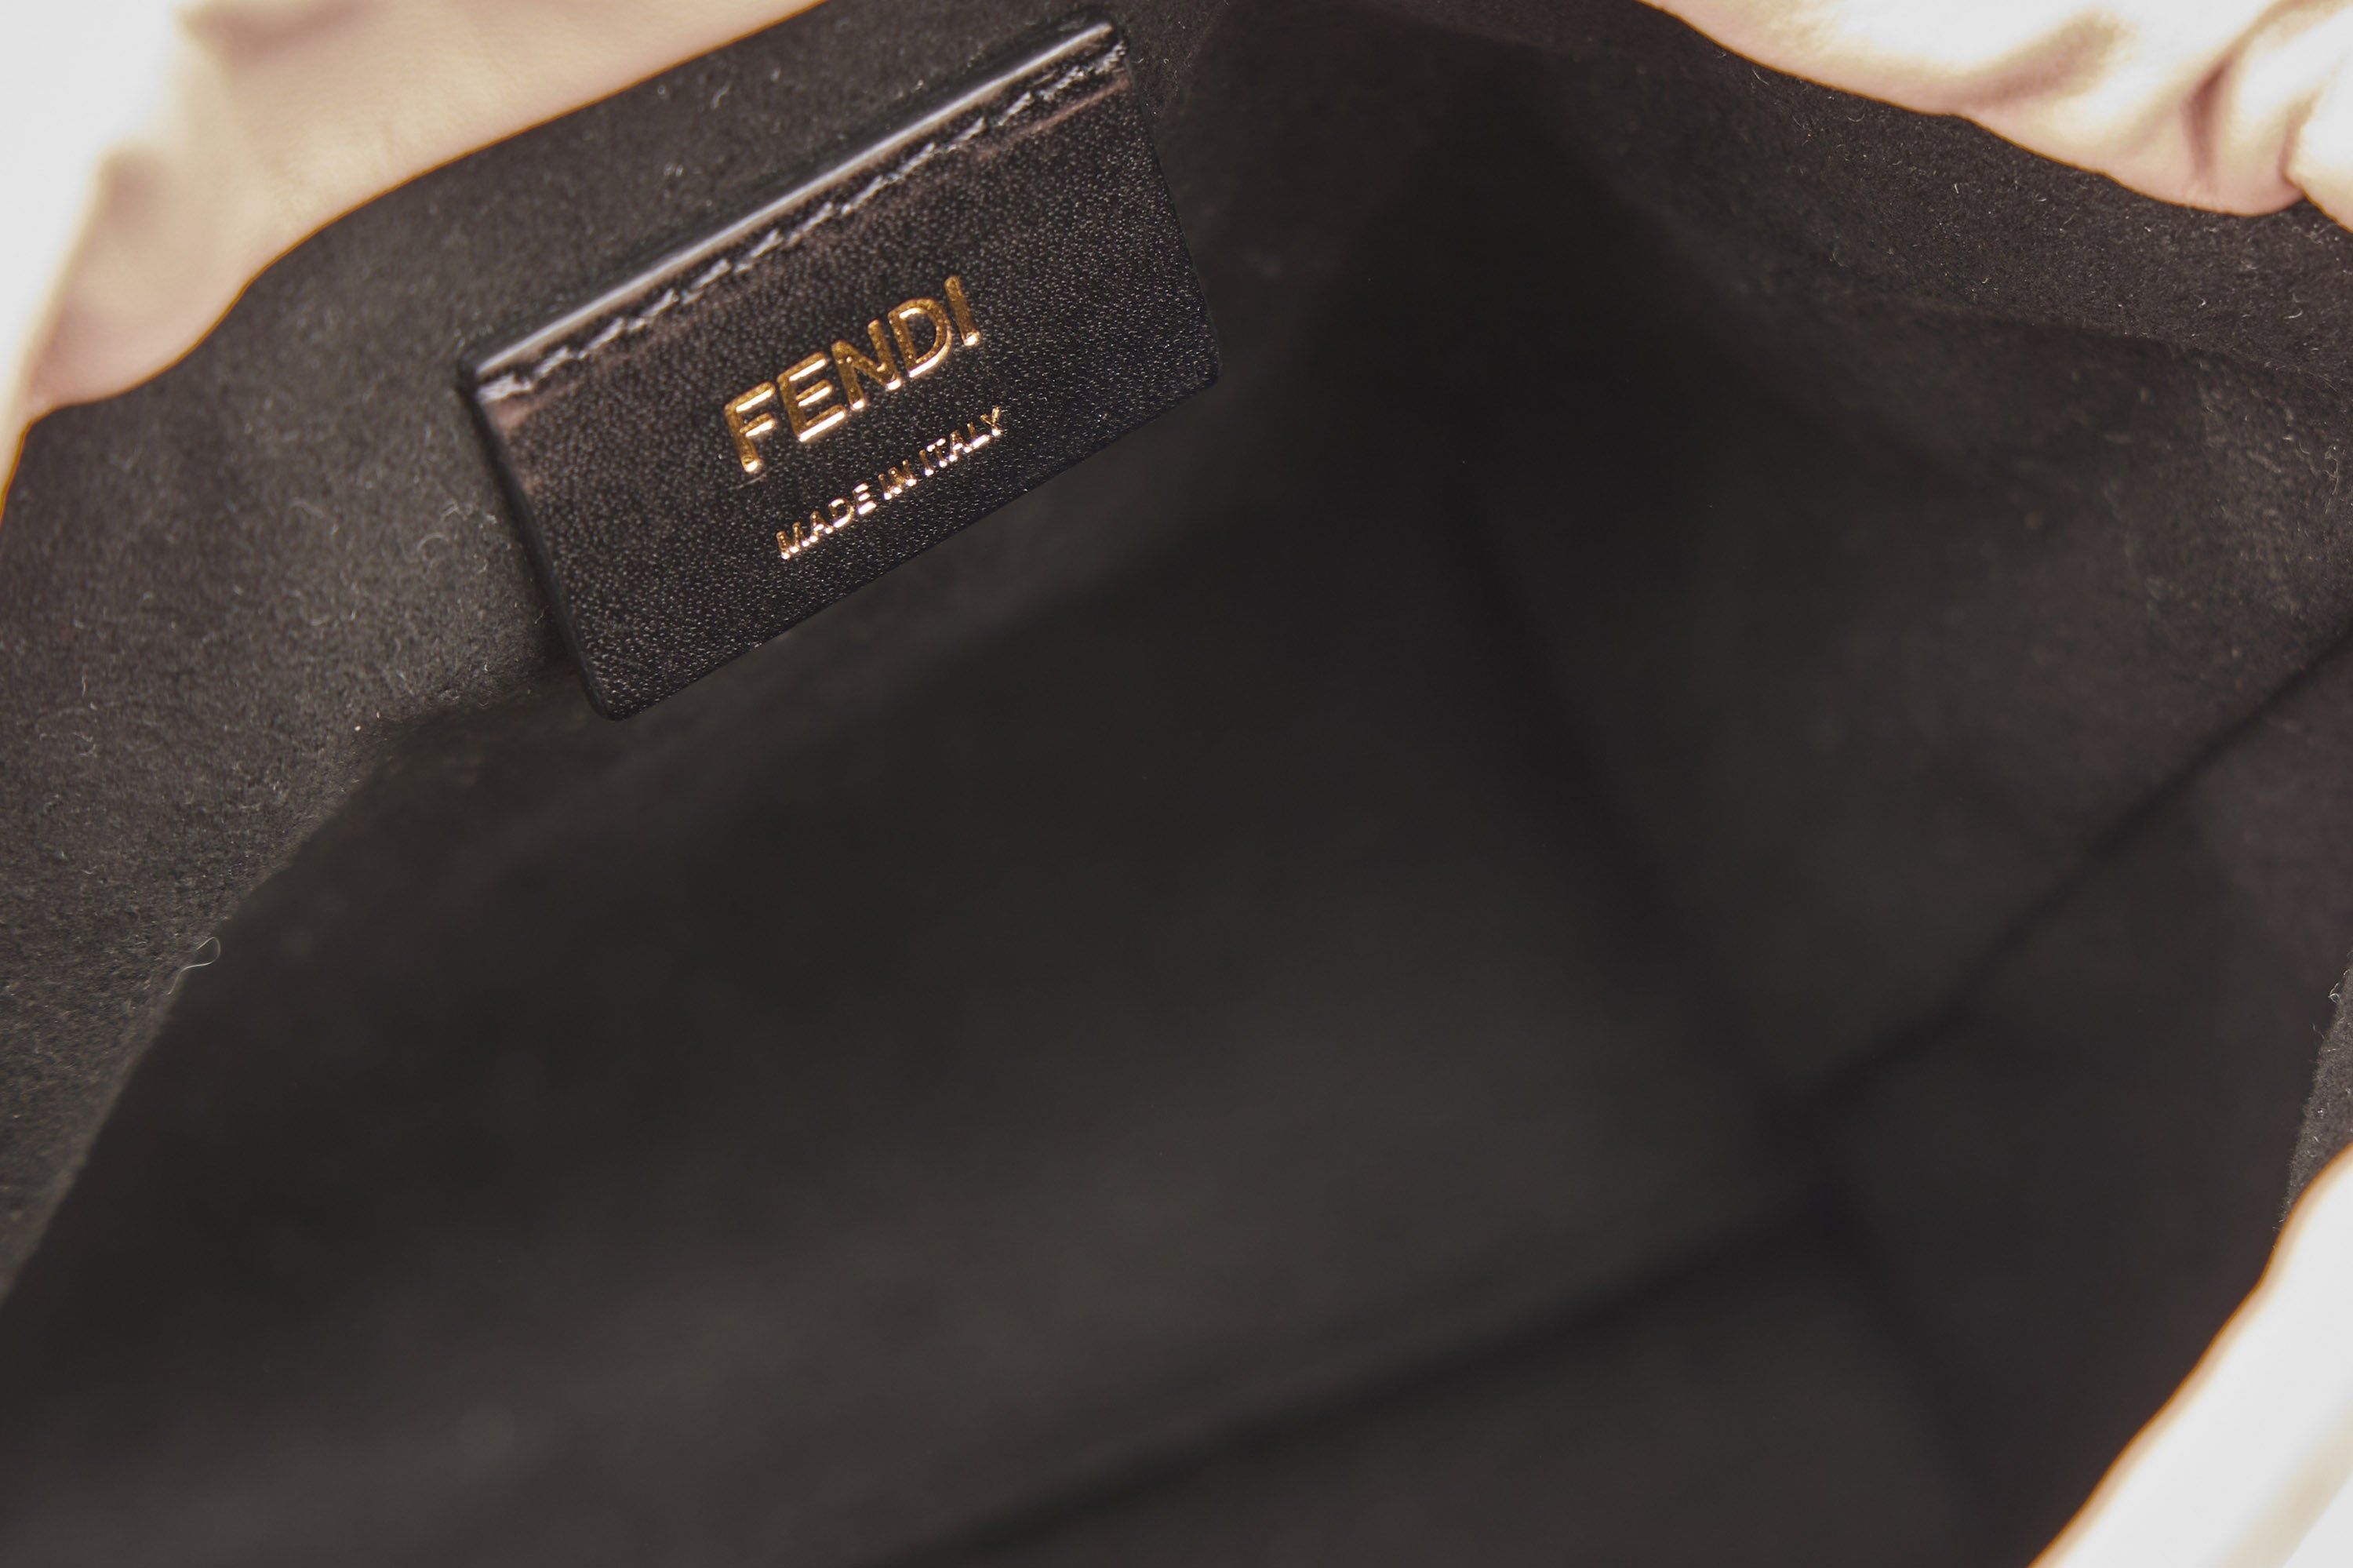 New Fendi Roma Sack Pink Leather Drawstring Pouch Crossbody Bag